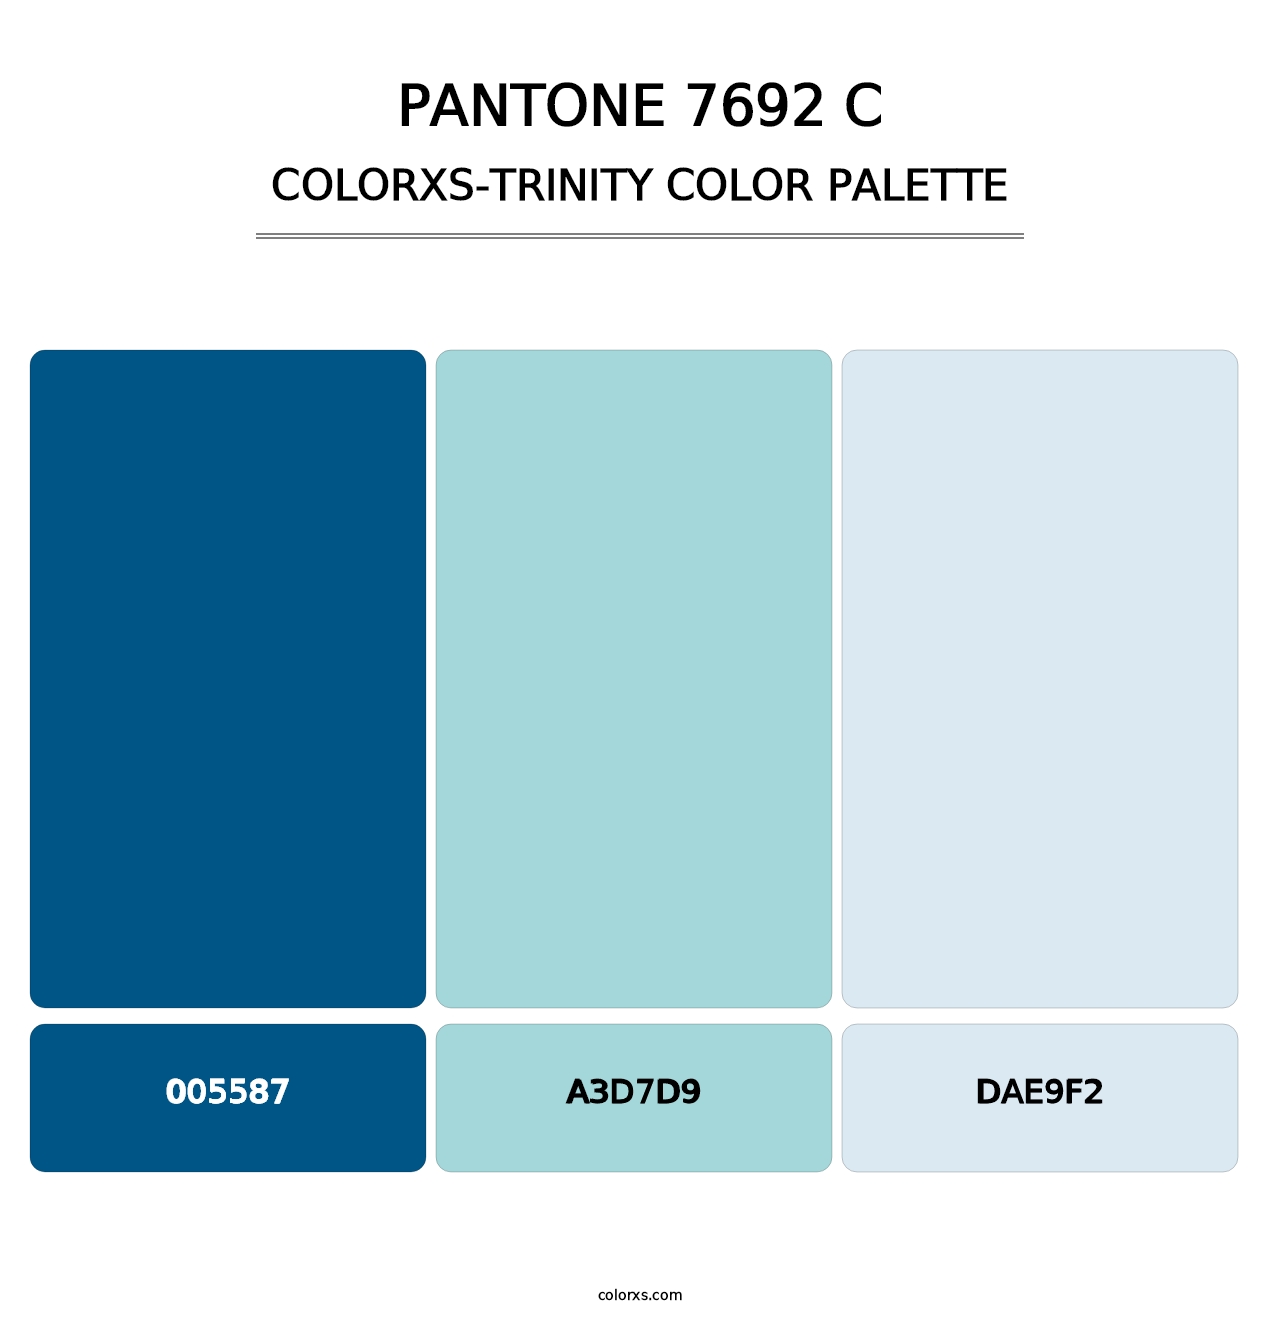 PANTONE 7692 C - Colorxs Trinity Palette